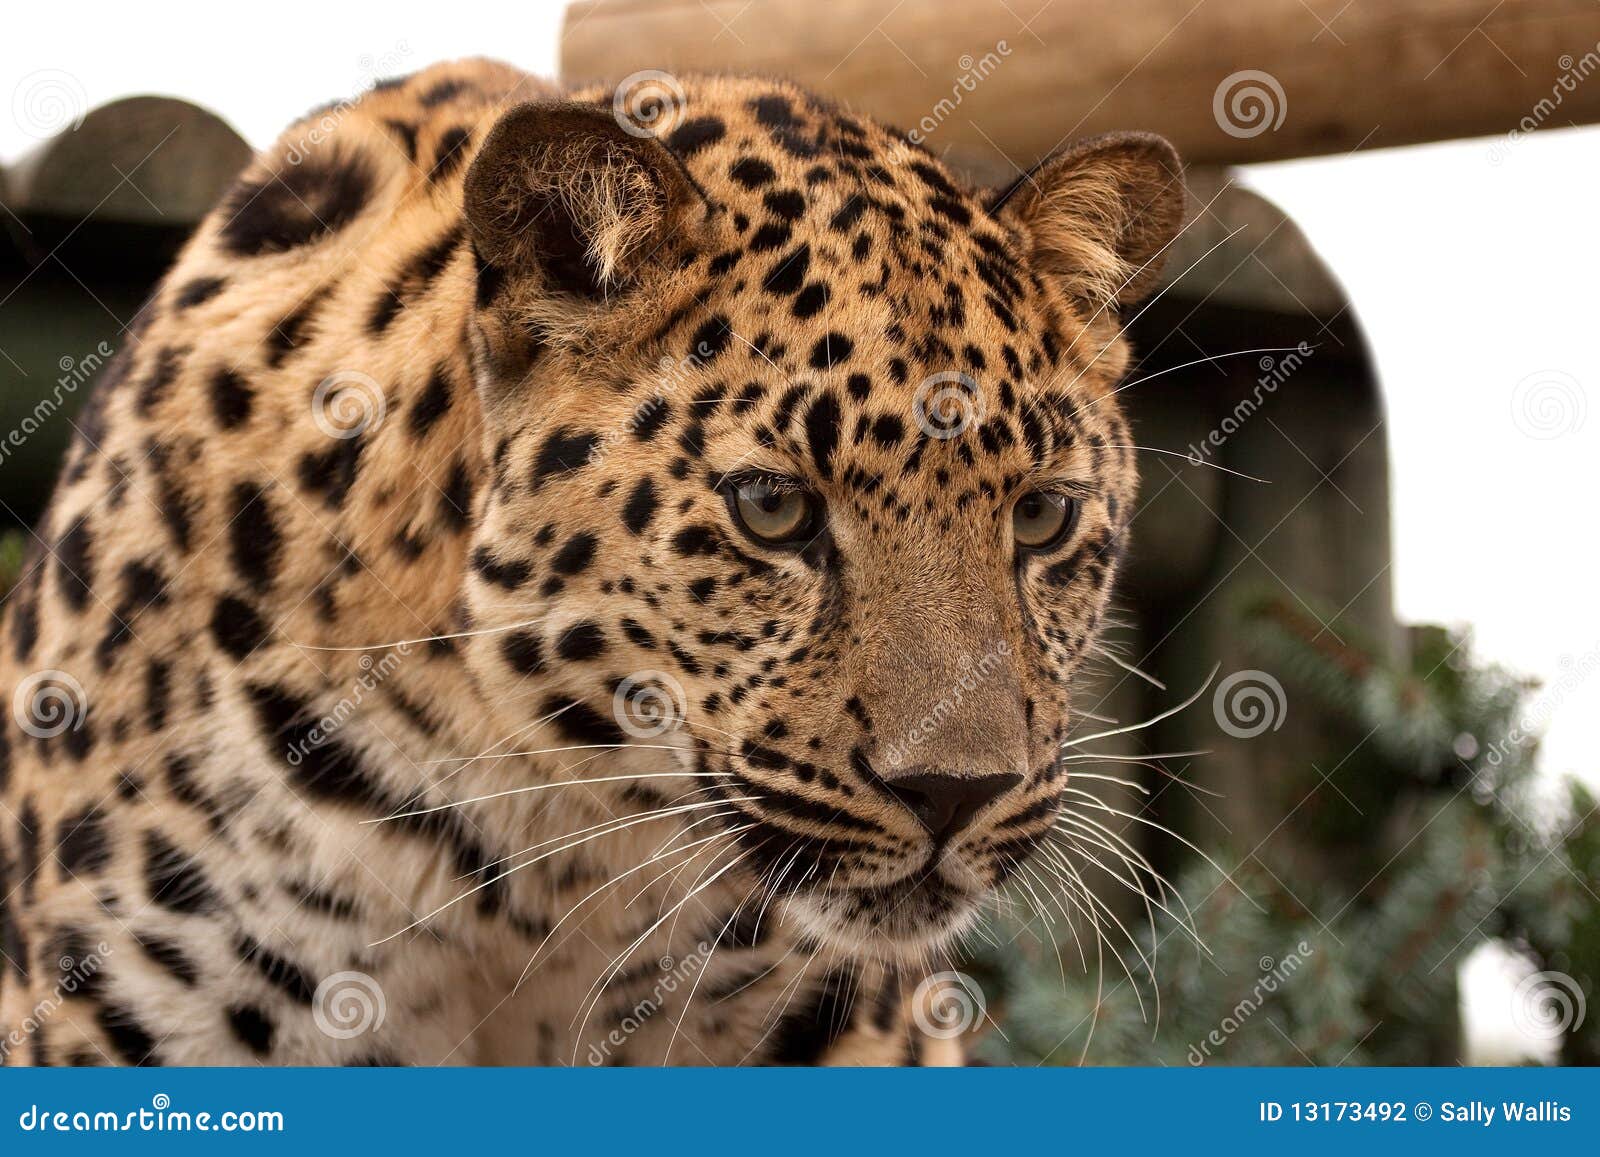 amur leopard gazing intently